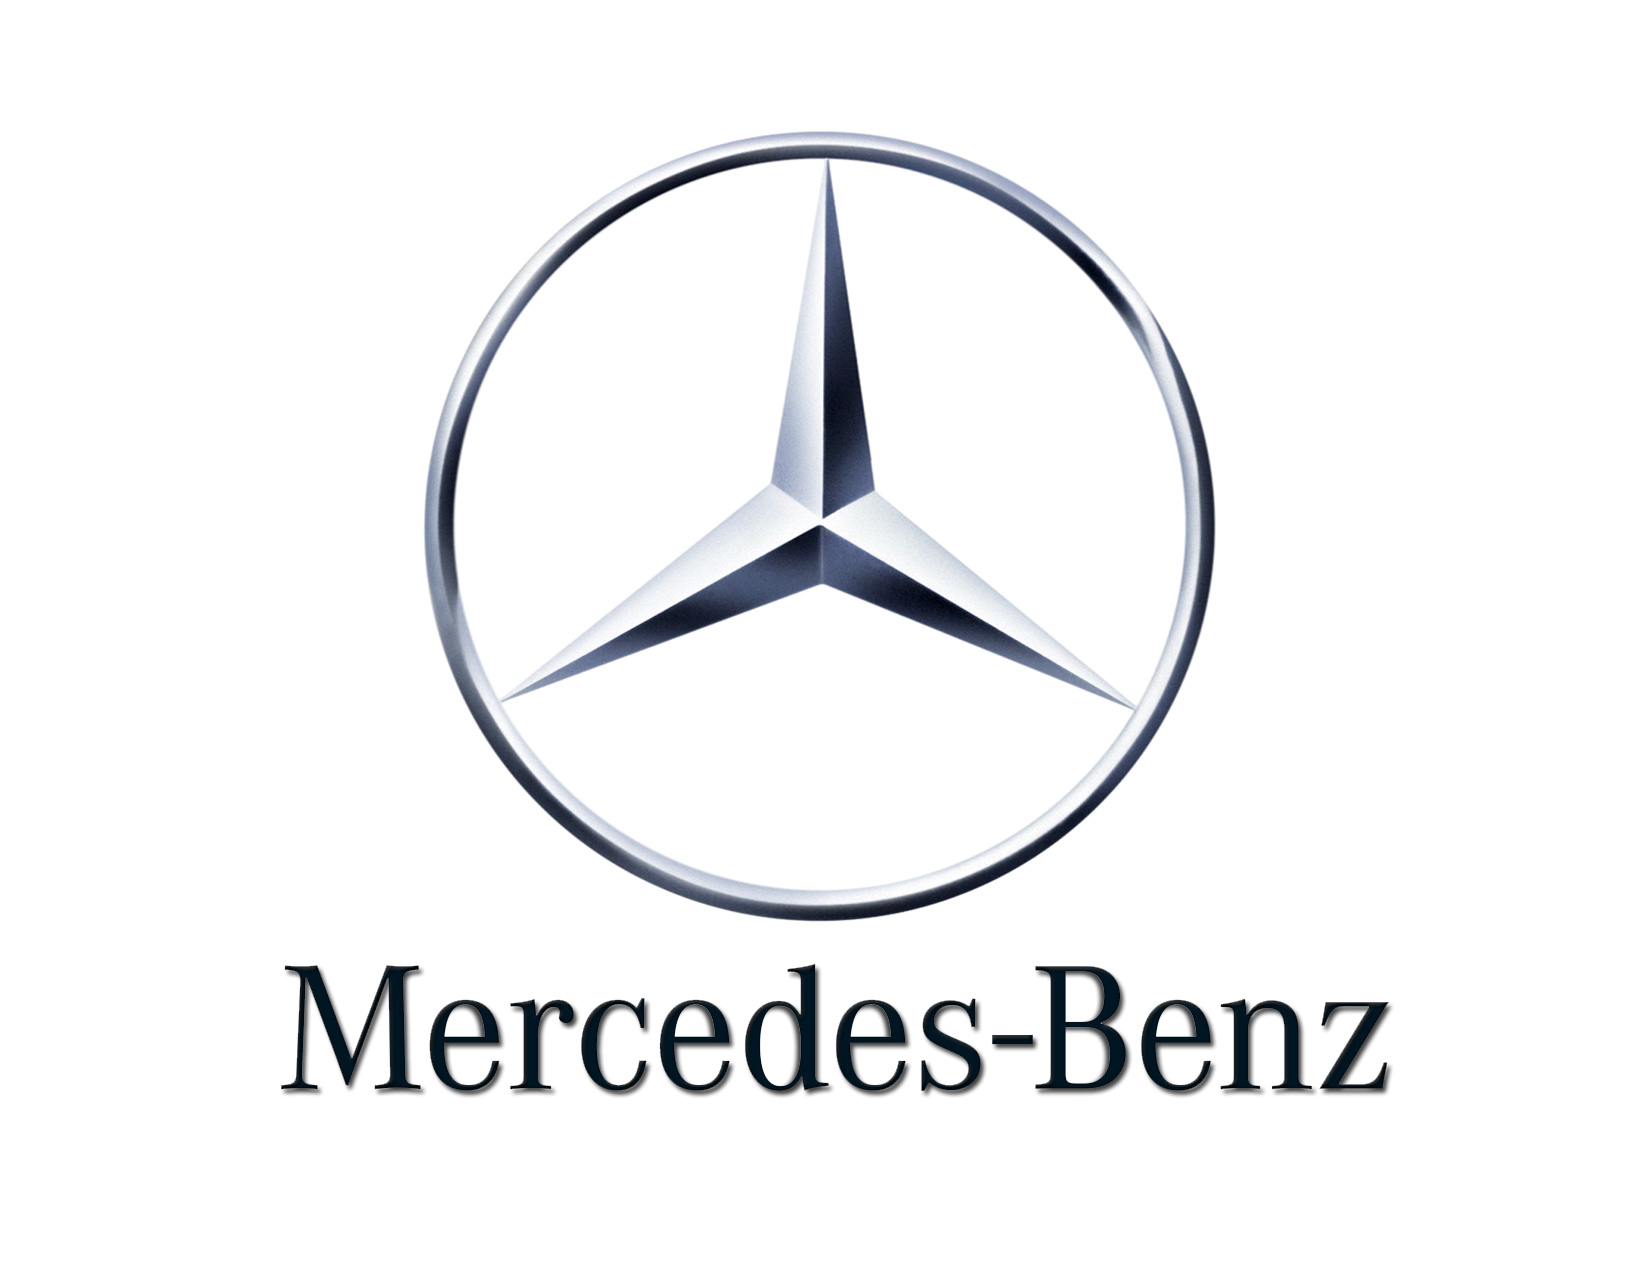 Mercedes-Logo.jpg